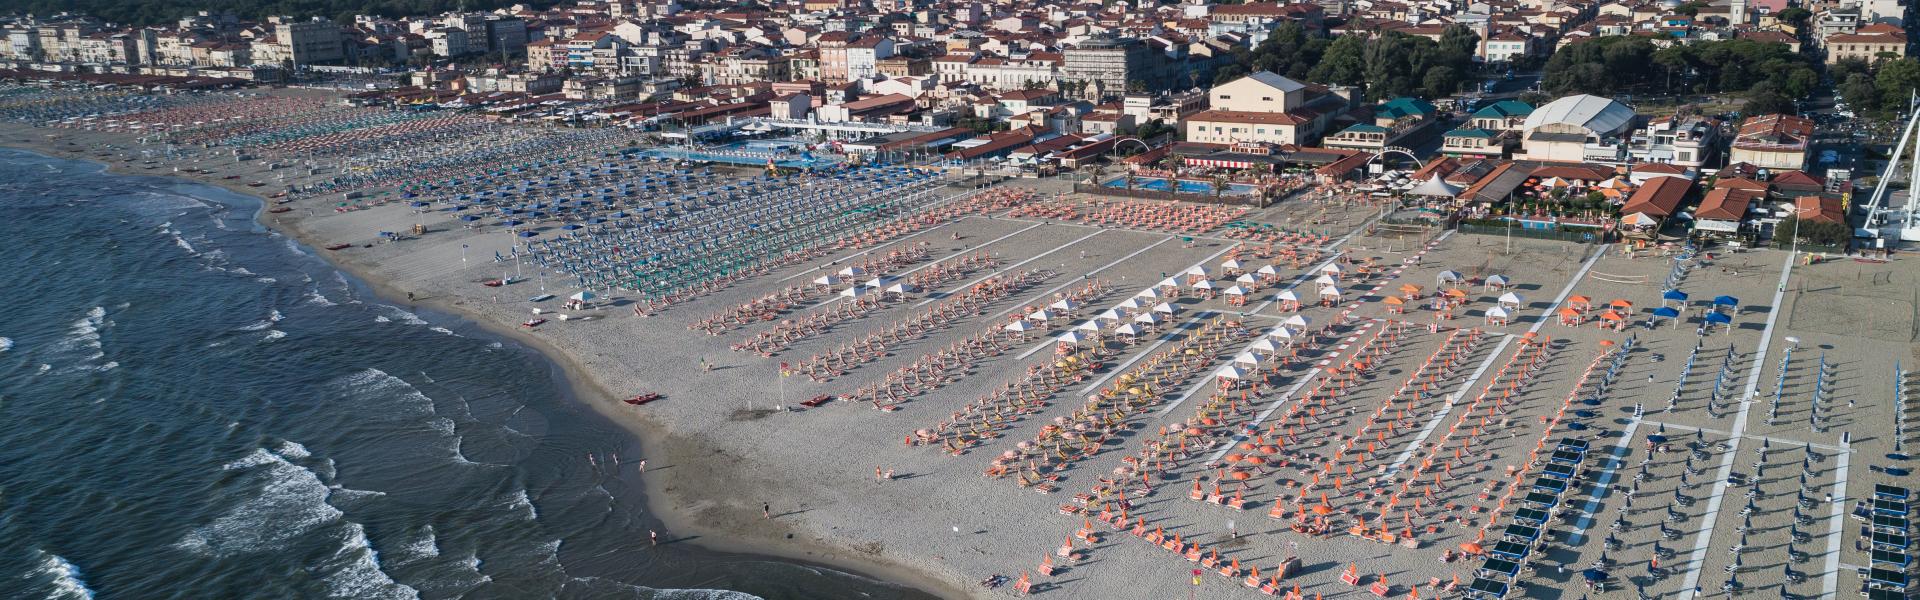 Viareggio Aerial View